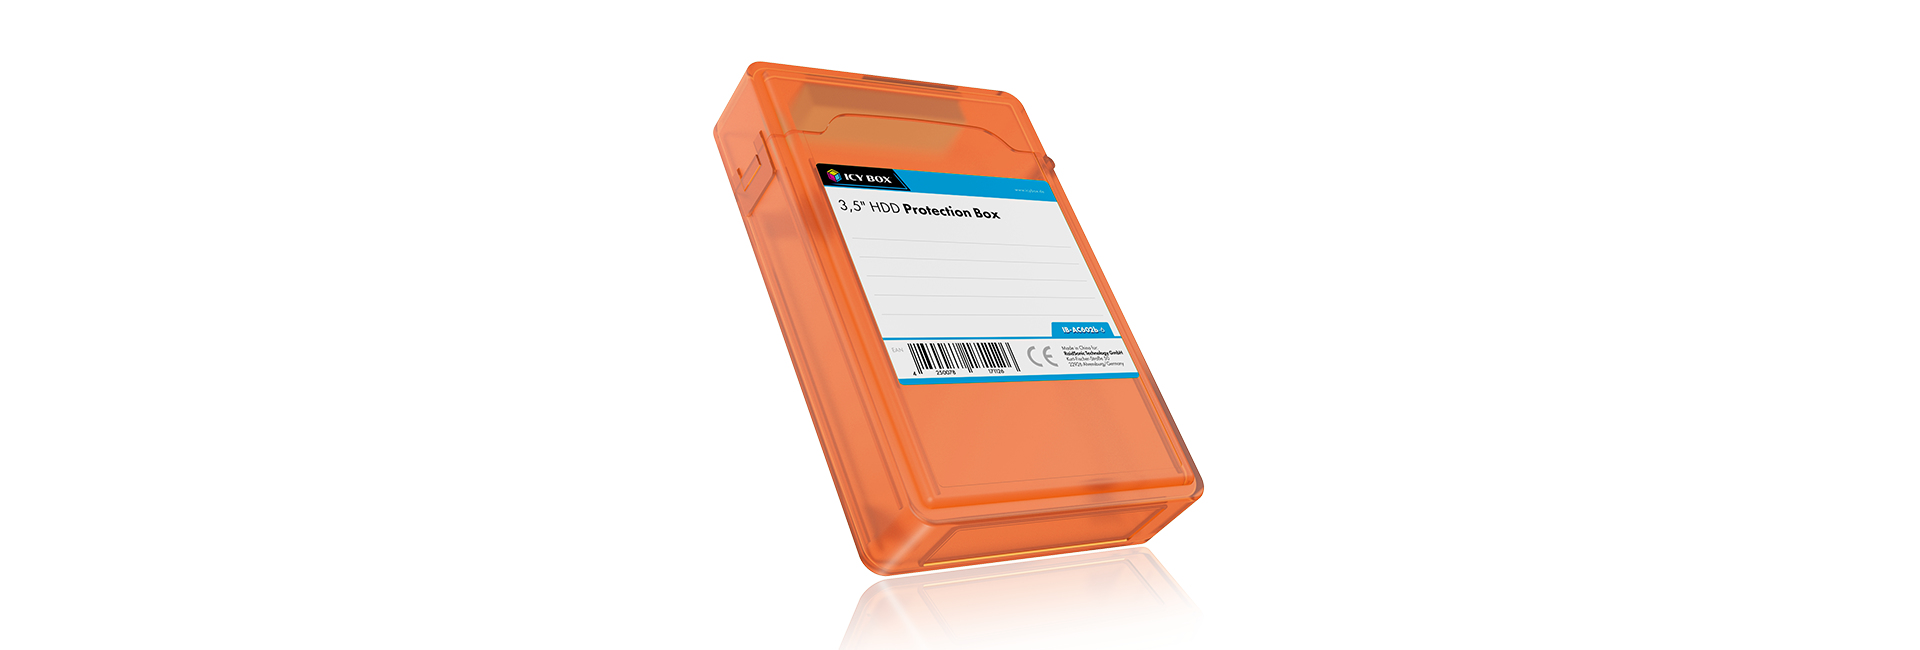 ICY BOX IB-AC602b-6 Pouch case Plastic Blue, Green, Grey, Orange, Red, White